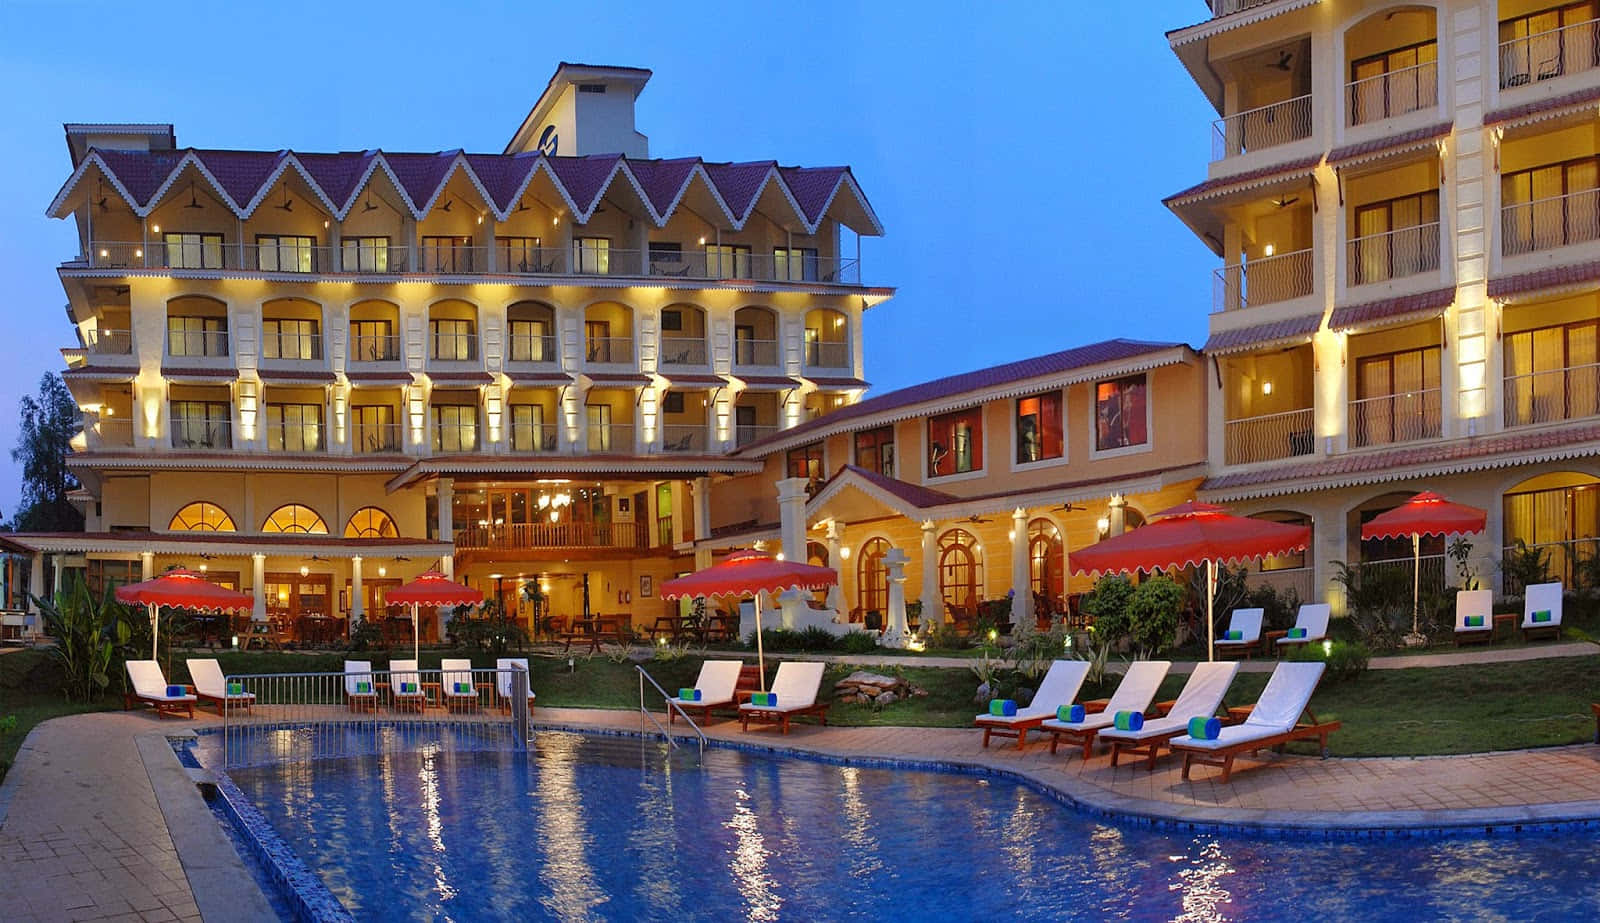 Experience five-star luxury hospitality at the beautiful Italia Hotel